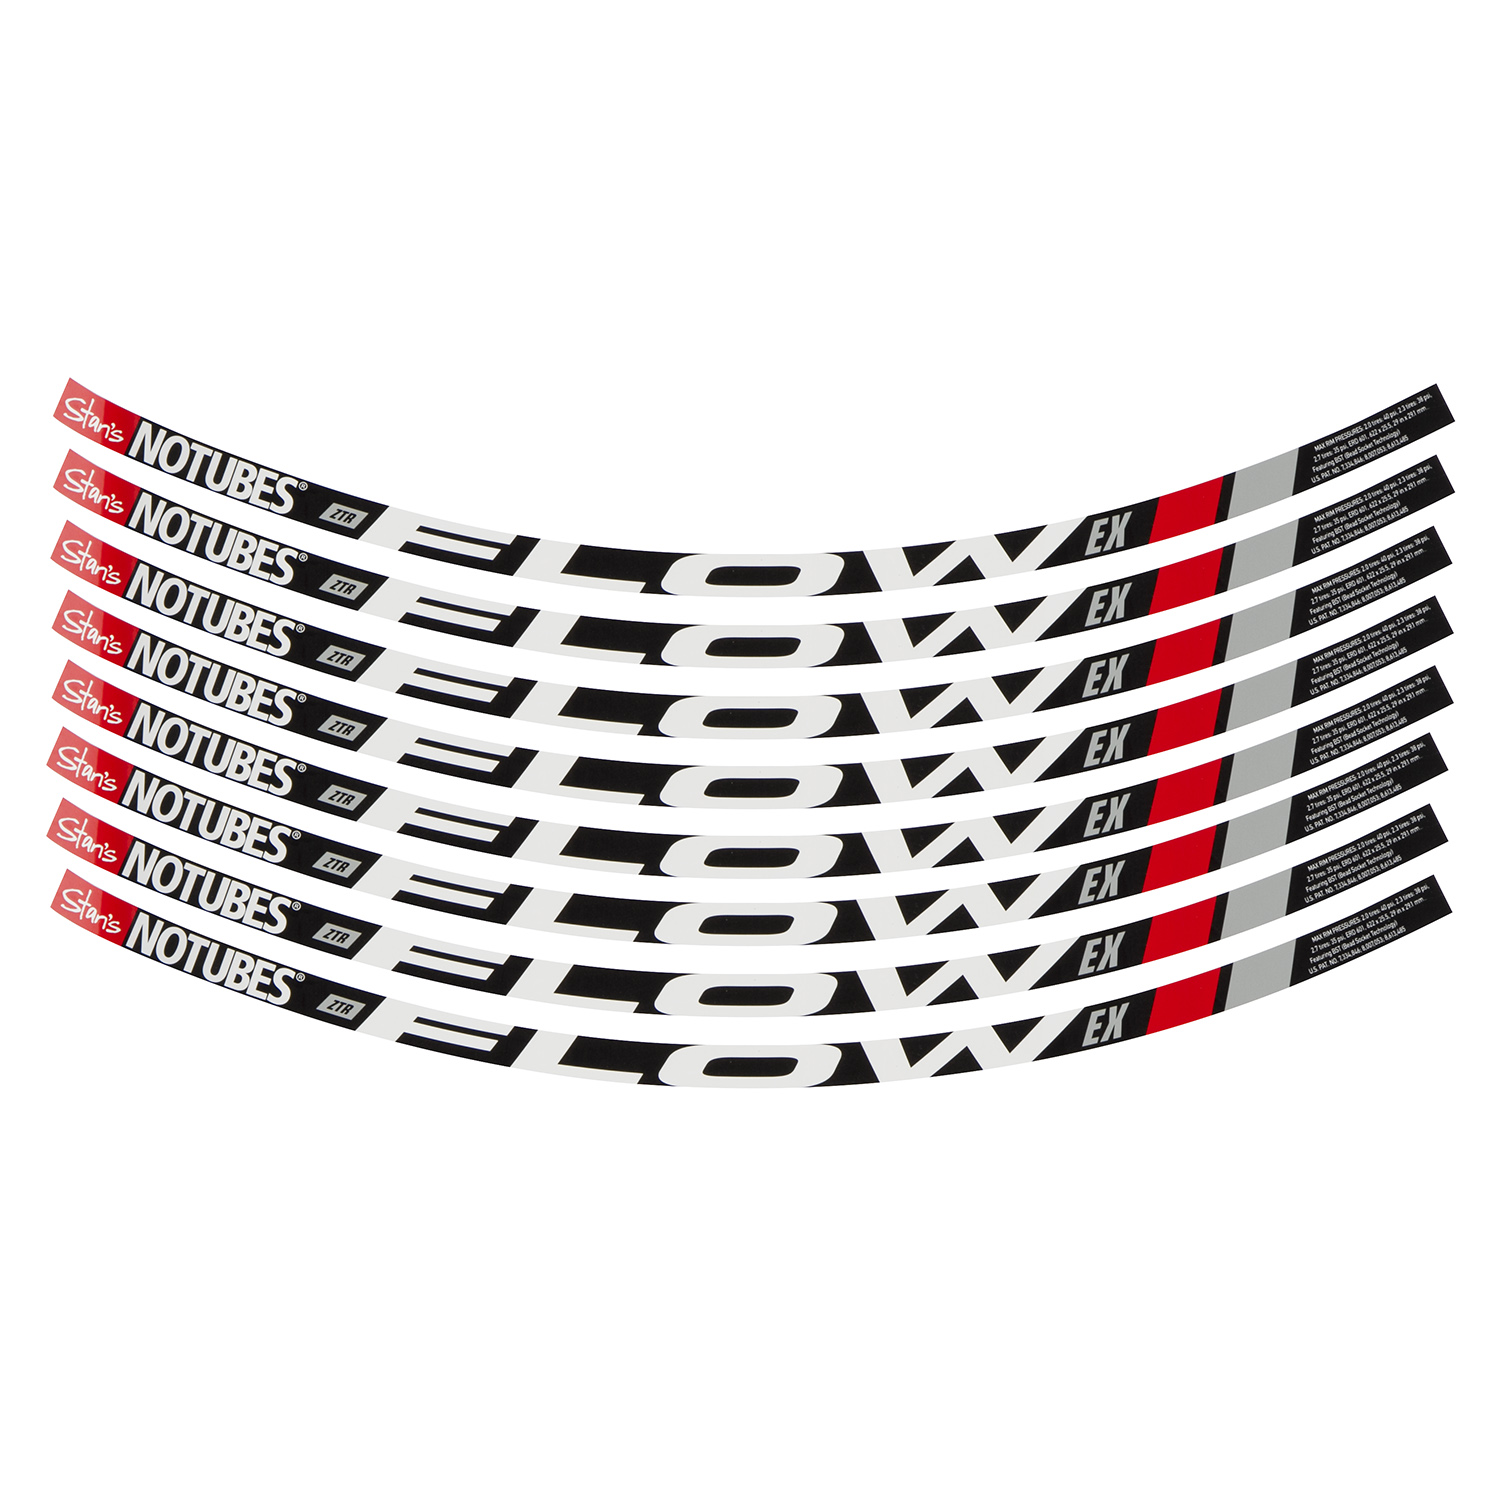 Stan's NoTubes Kit Adesivi Cerchi ZTR Flow Red, for one Wheel Set, for ZTR Flow 2015, 29 Inch